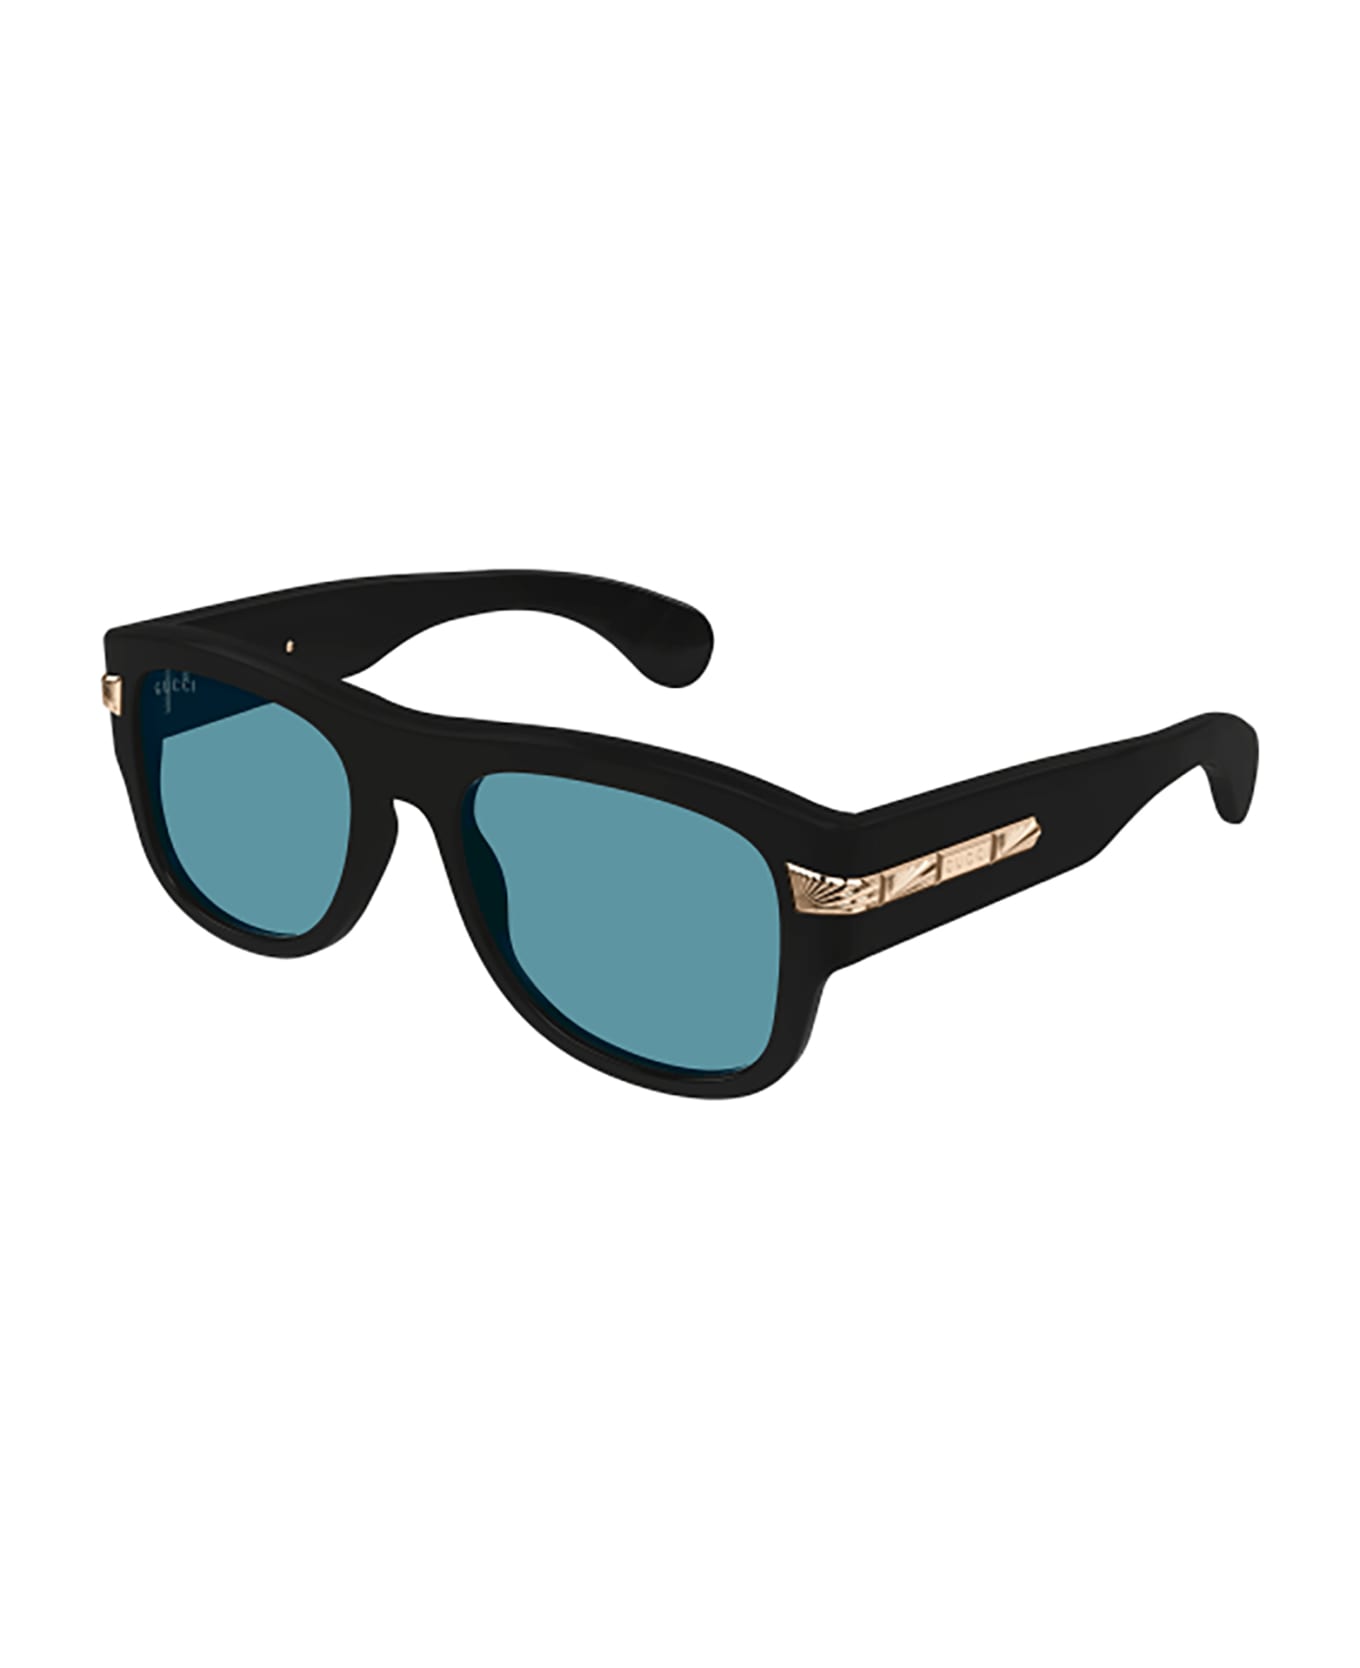 Gucci Eyewear GG1517S Sunglasses - Black Black Blue